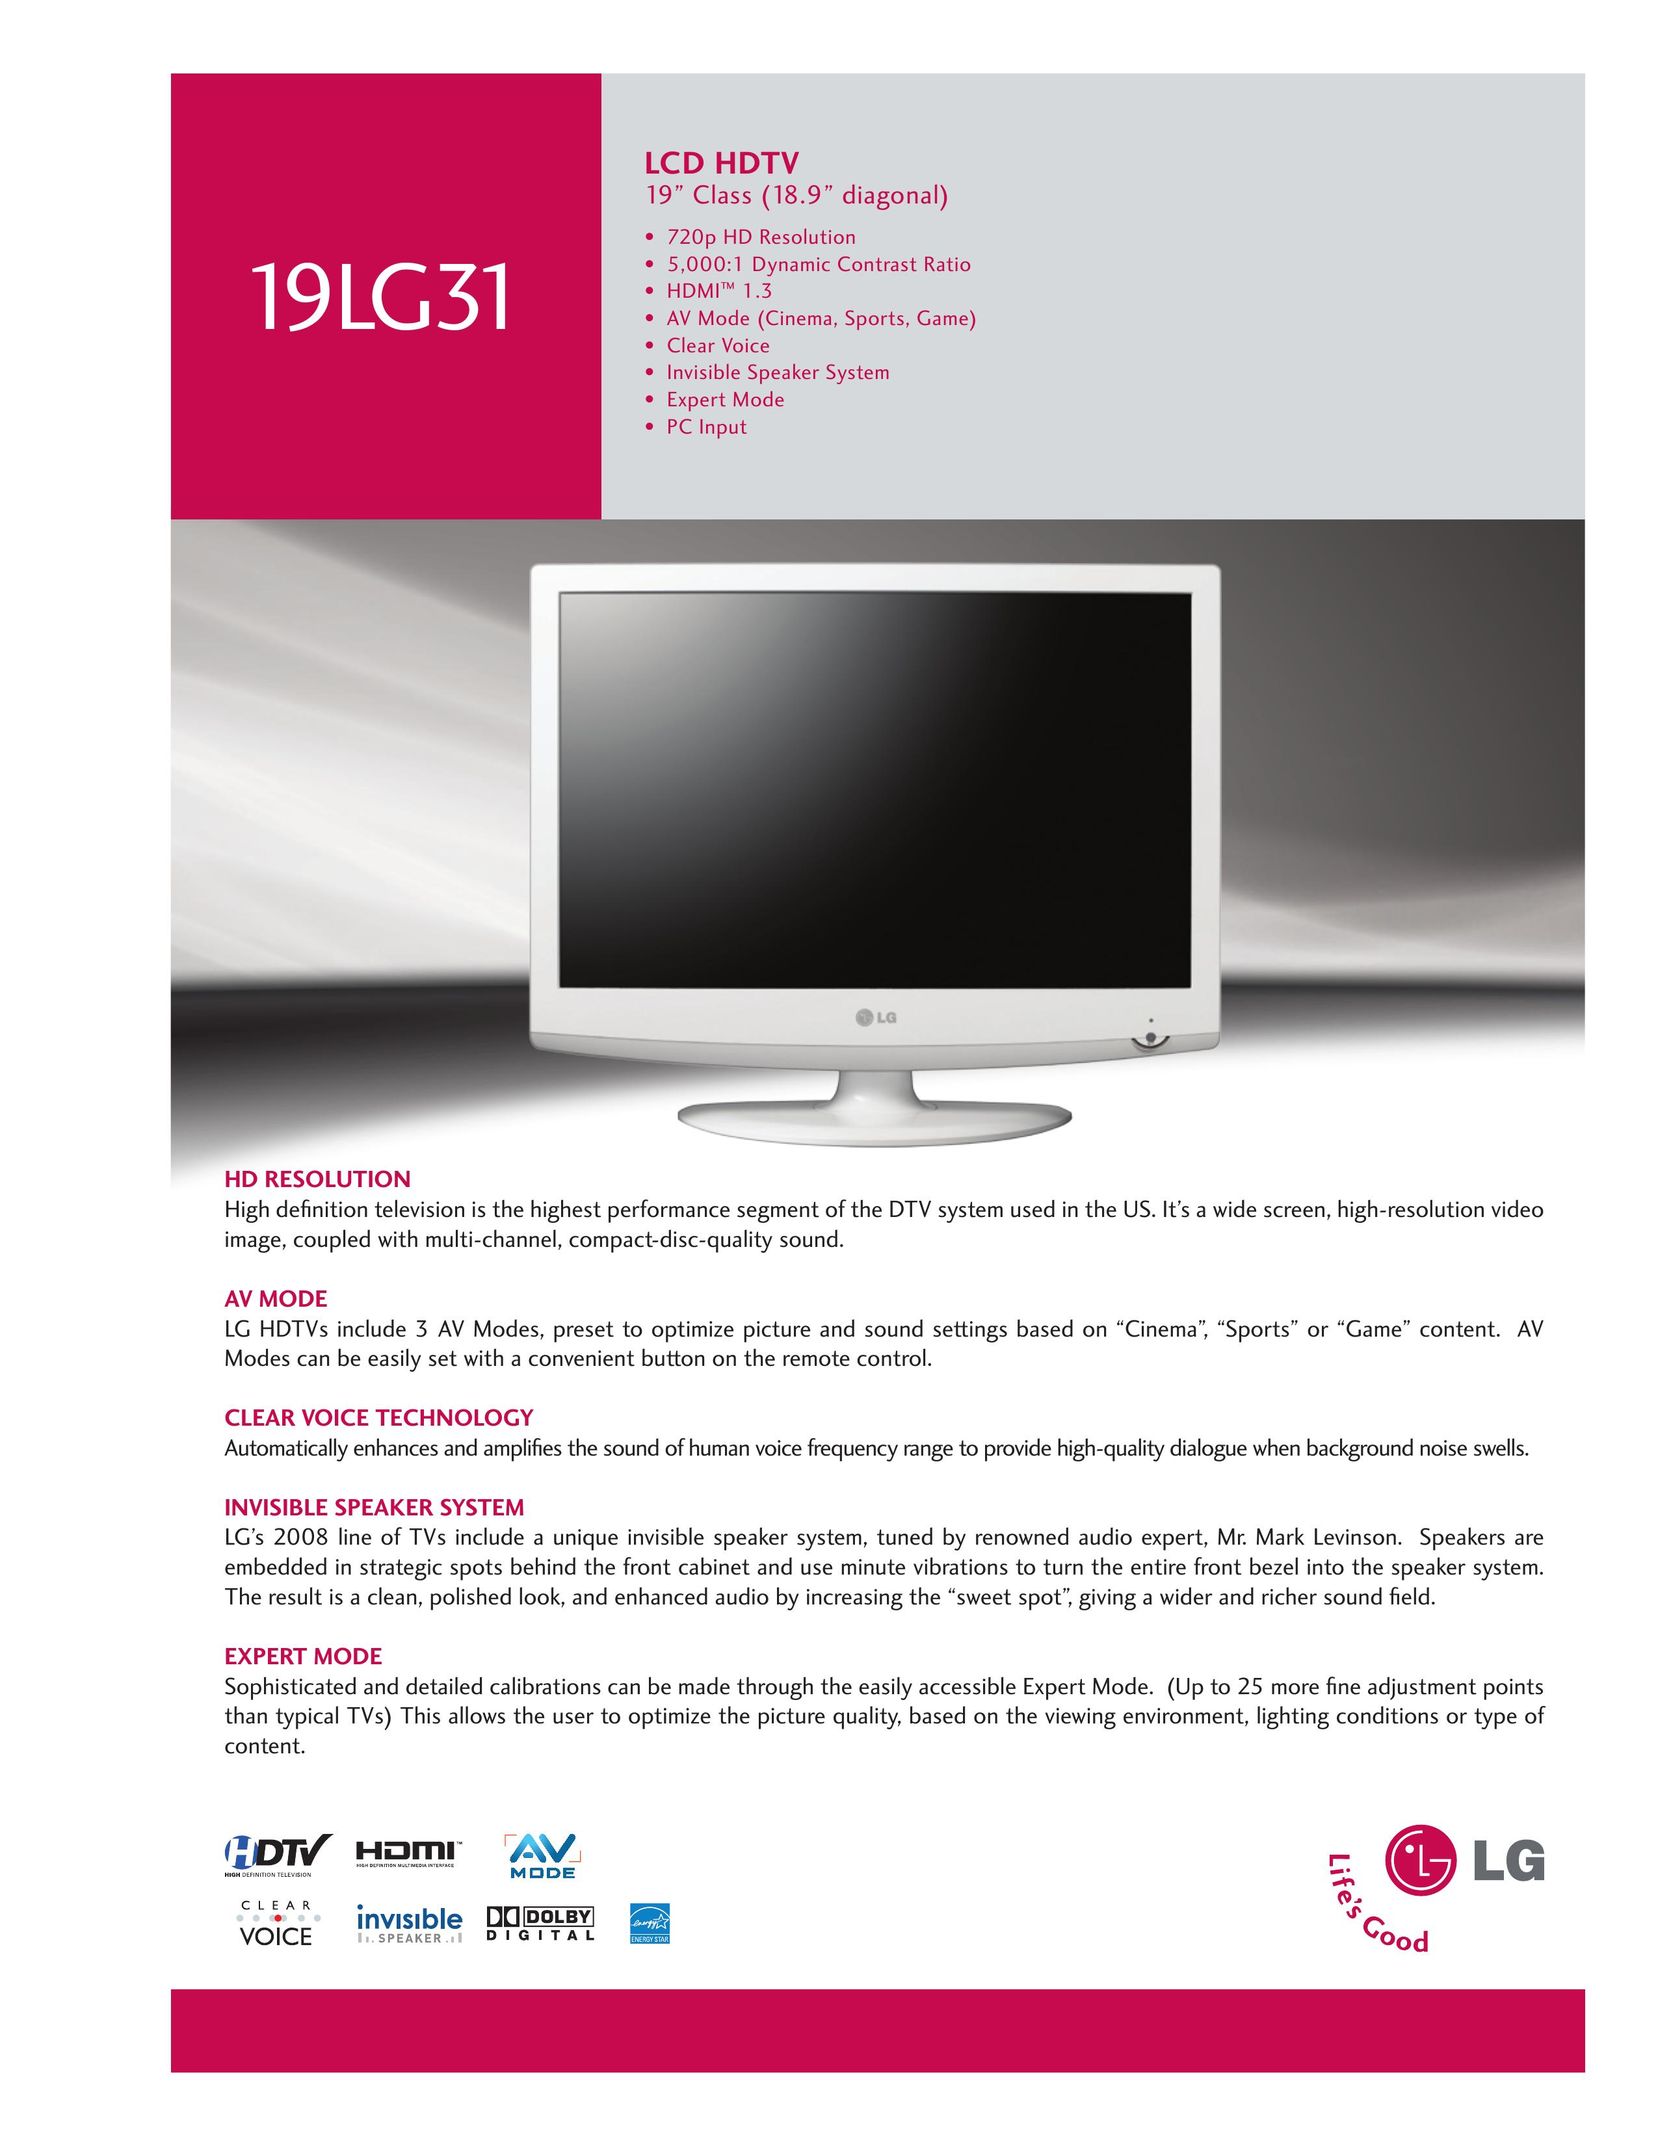 Goldstar 19LG31 Flat Panel Television User Manual